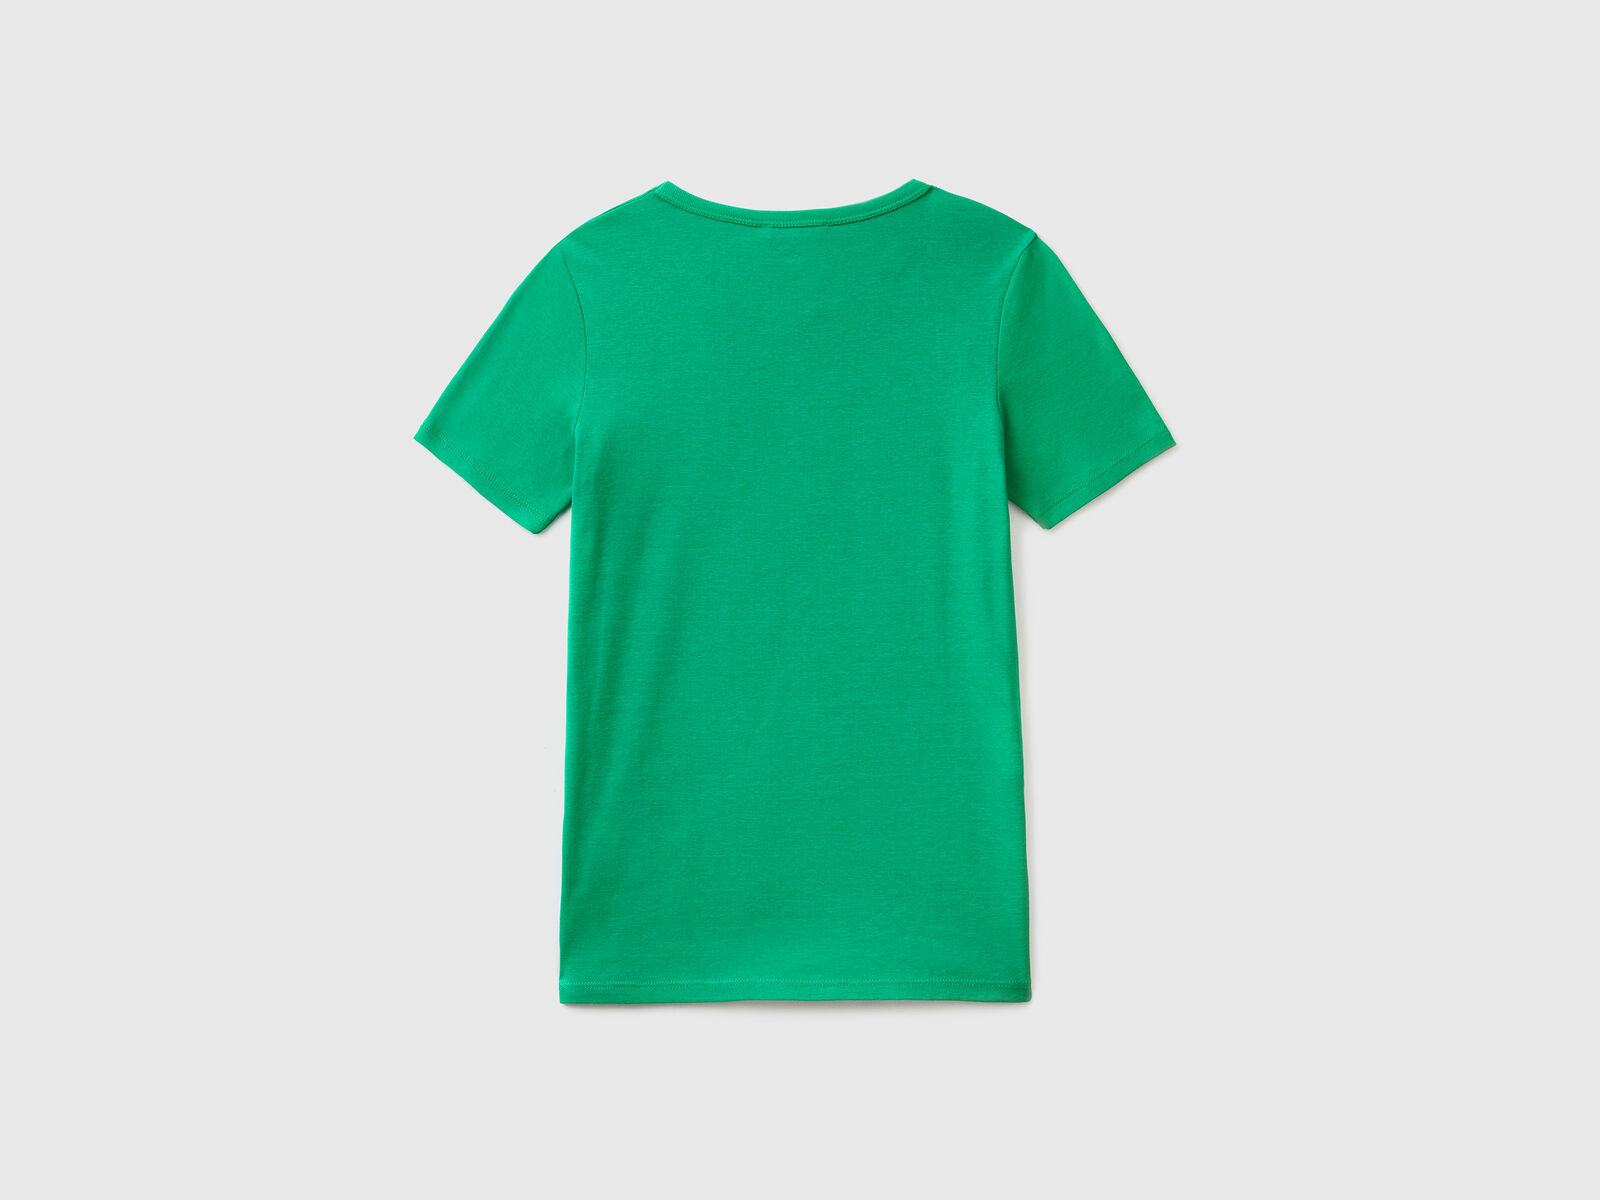 T-shirt in 100% | cotton glitter with - Benetton Green logo print